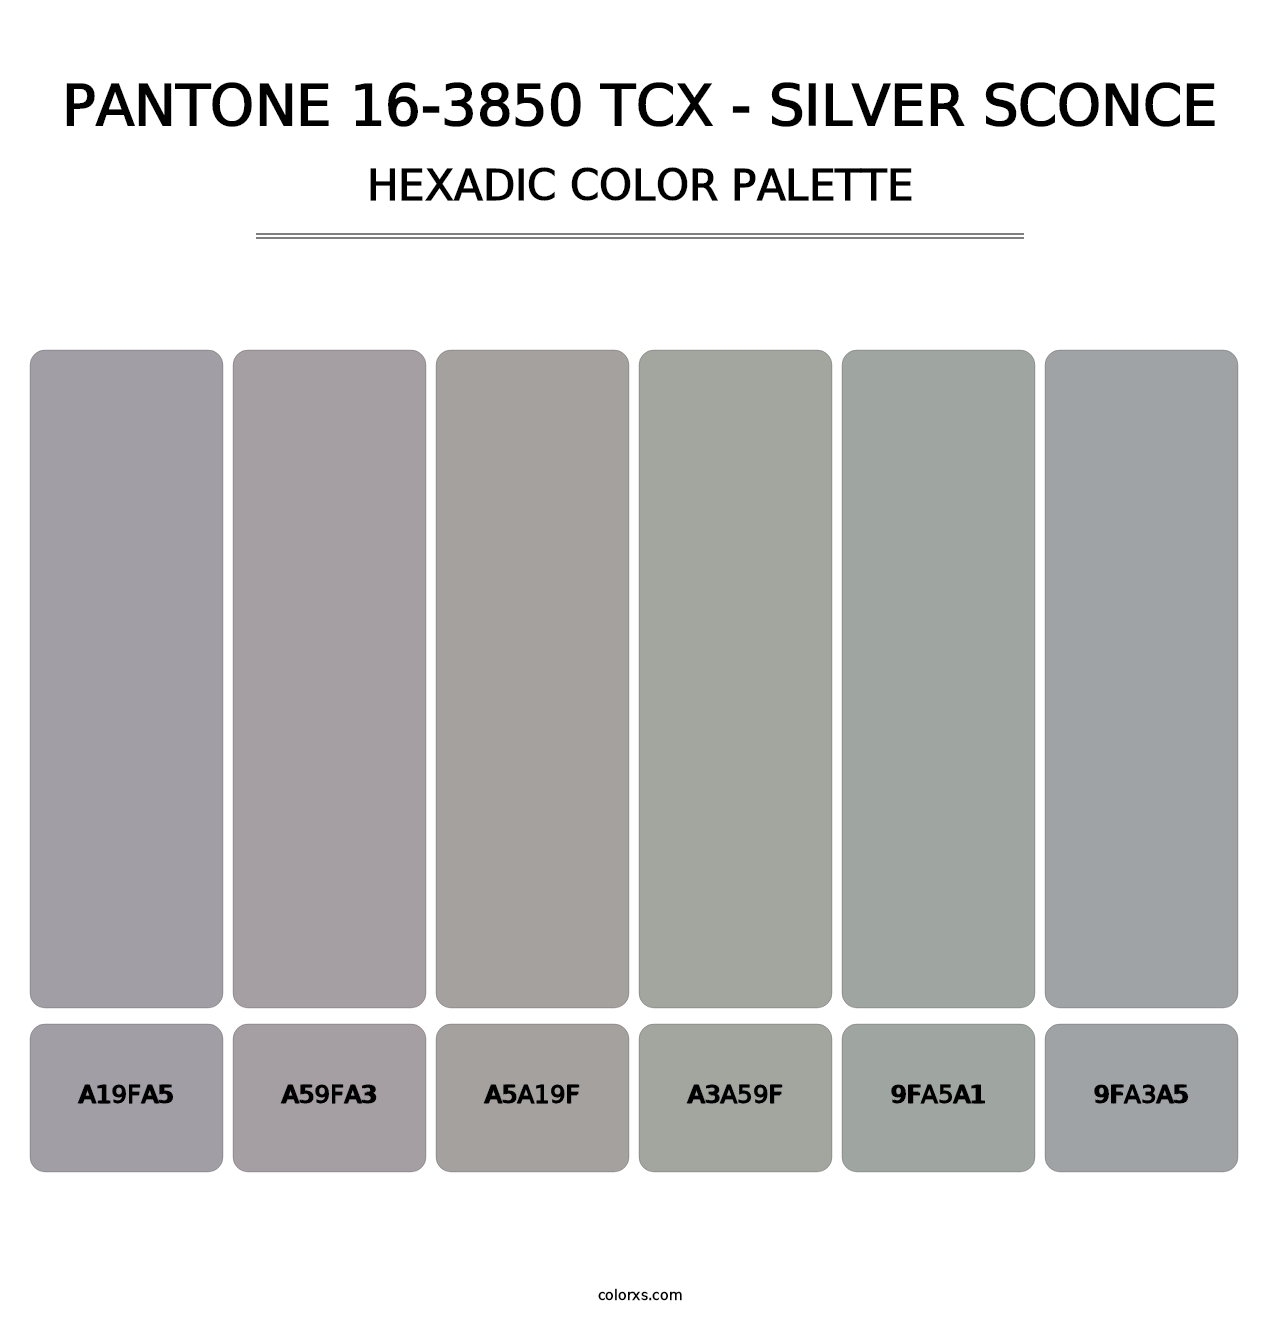 PANTONE 16-3850 TCX - Silver Sconce - Hexadic Color Palette